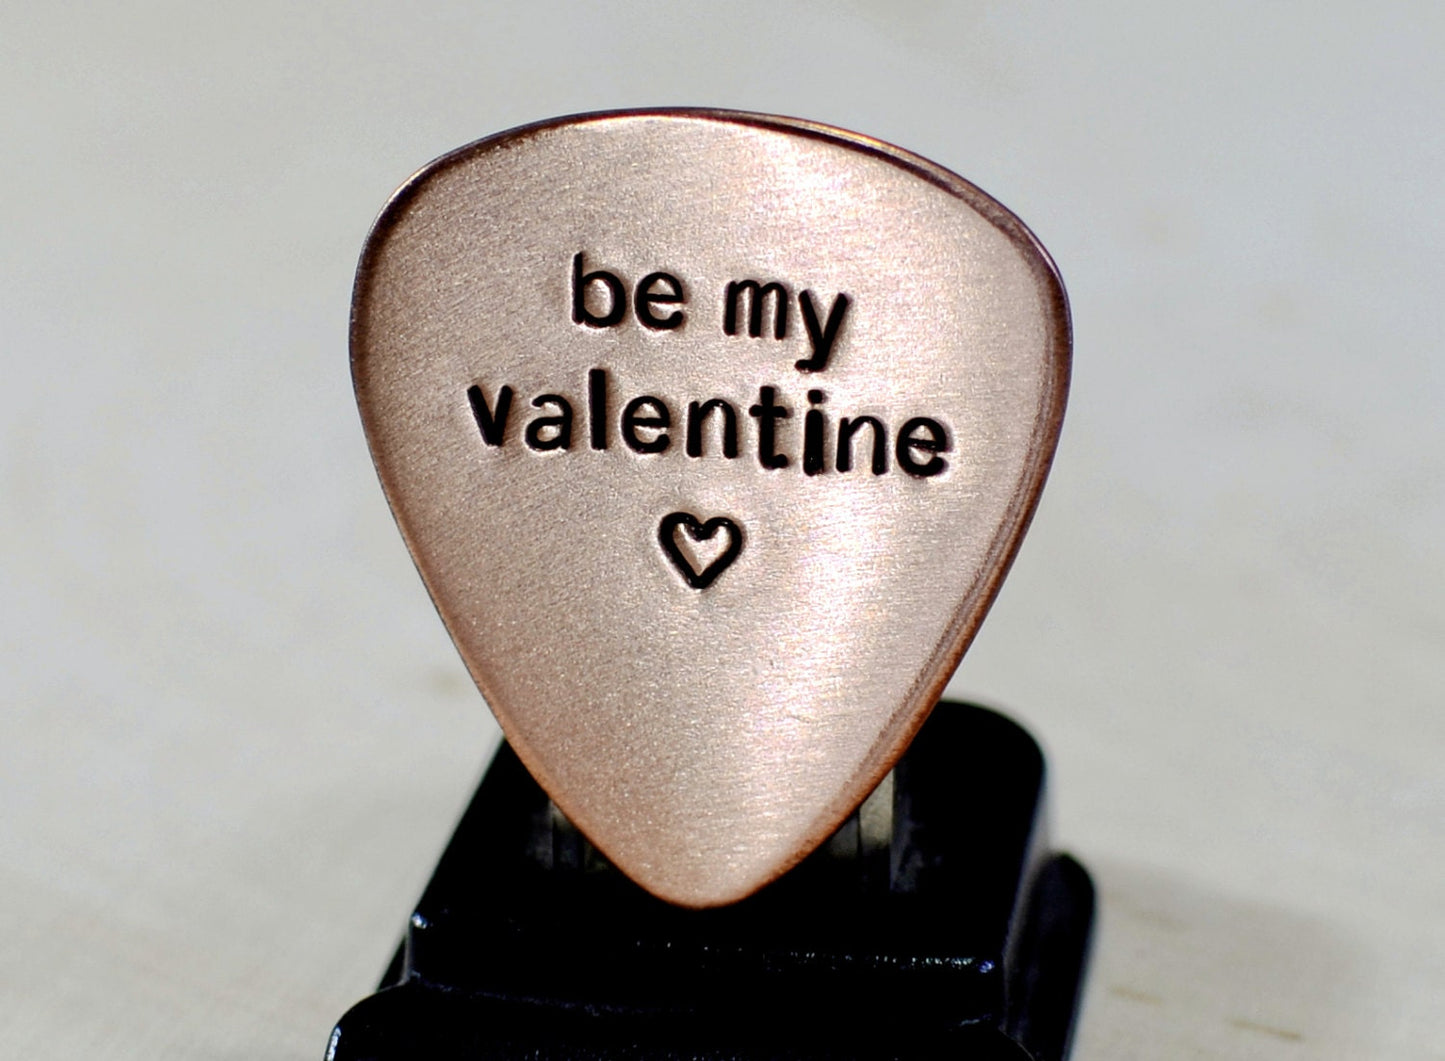 Be my Valentine Guitar Pick in various metals